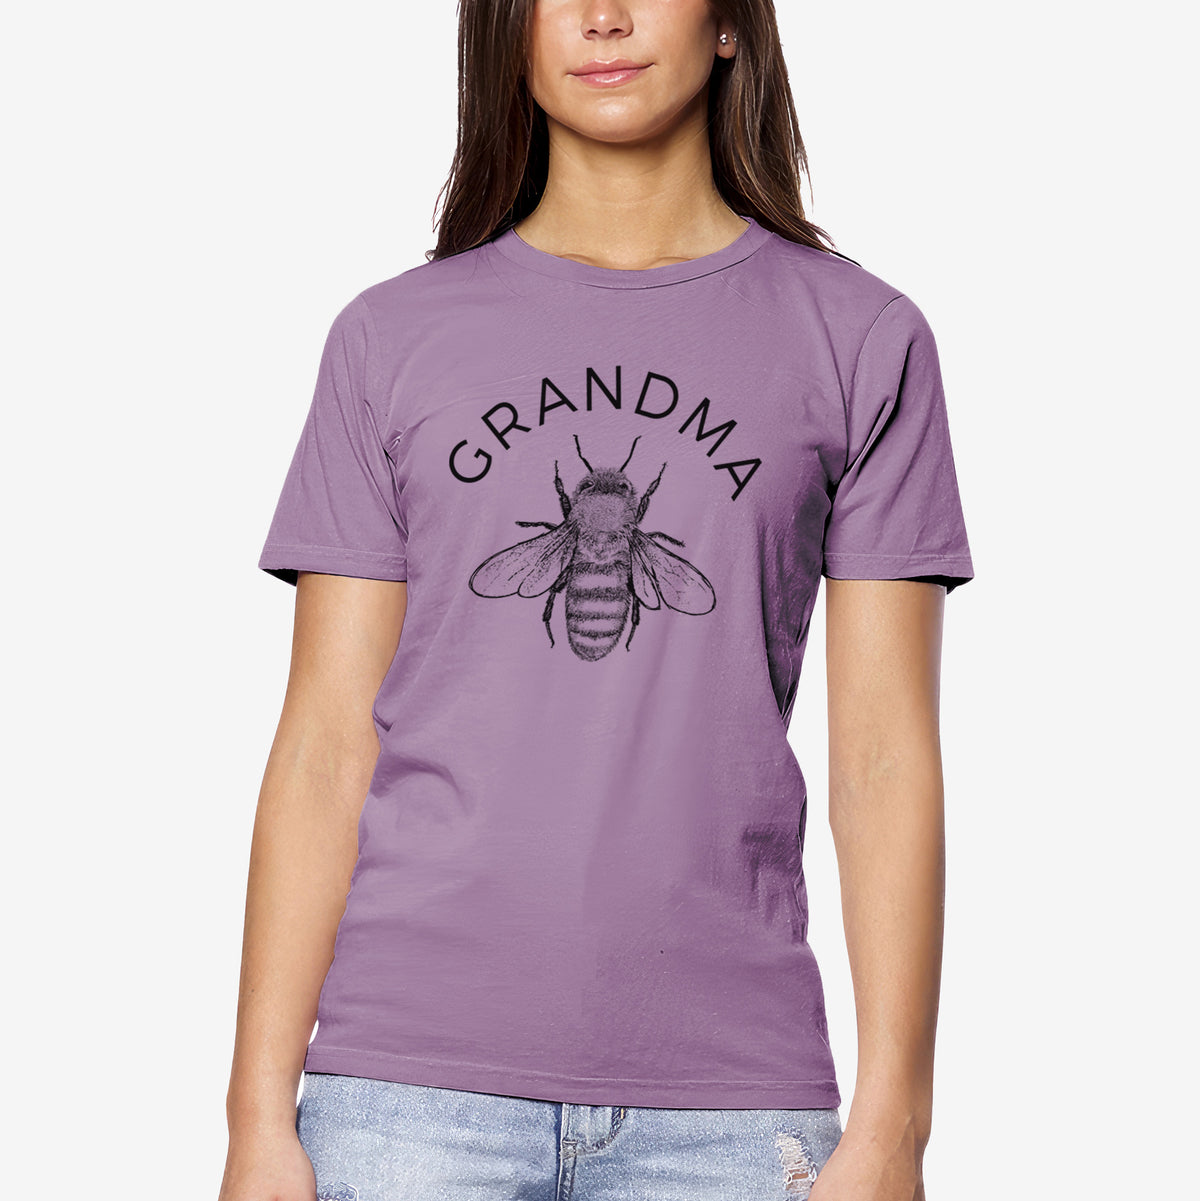 Grandma Bee - Unisex Crewneck - Made in USA - 100% Organic Cotton